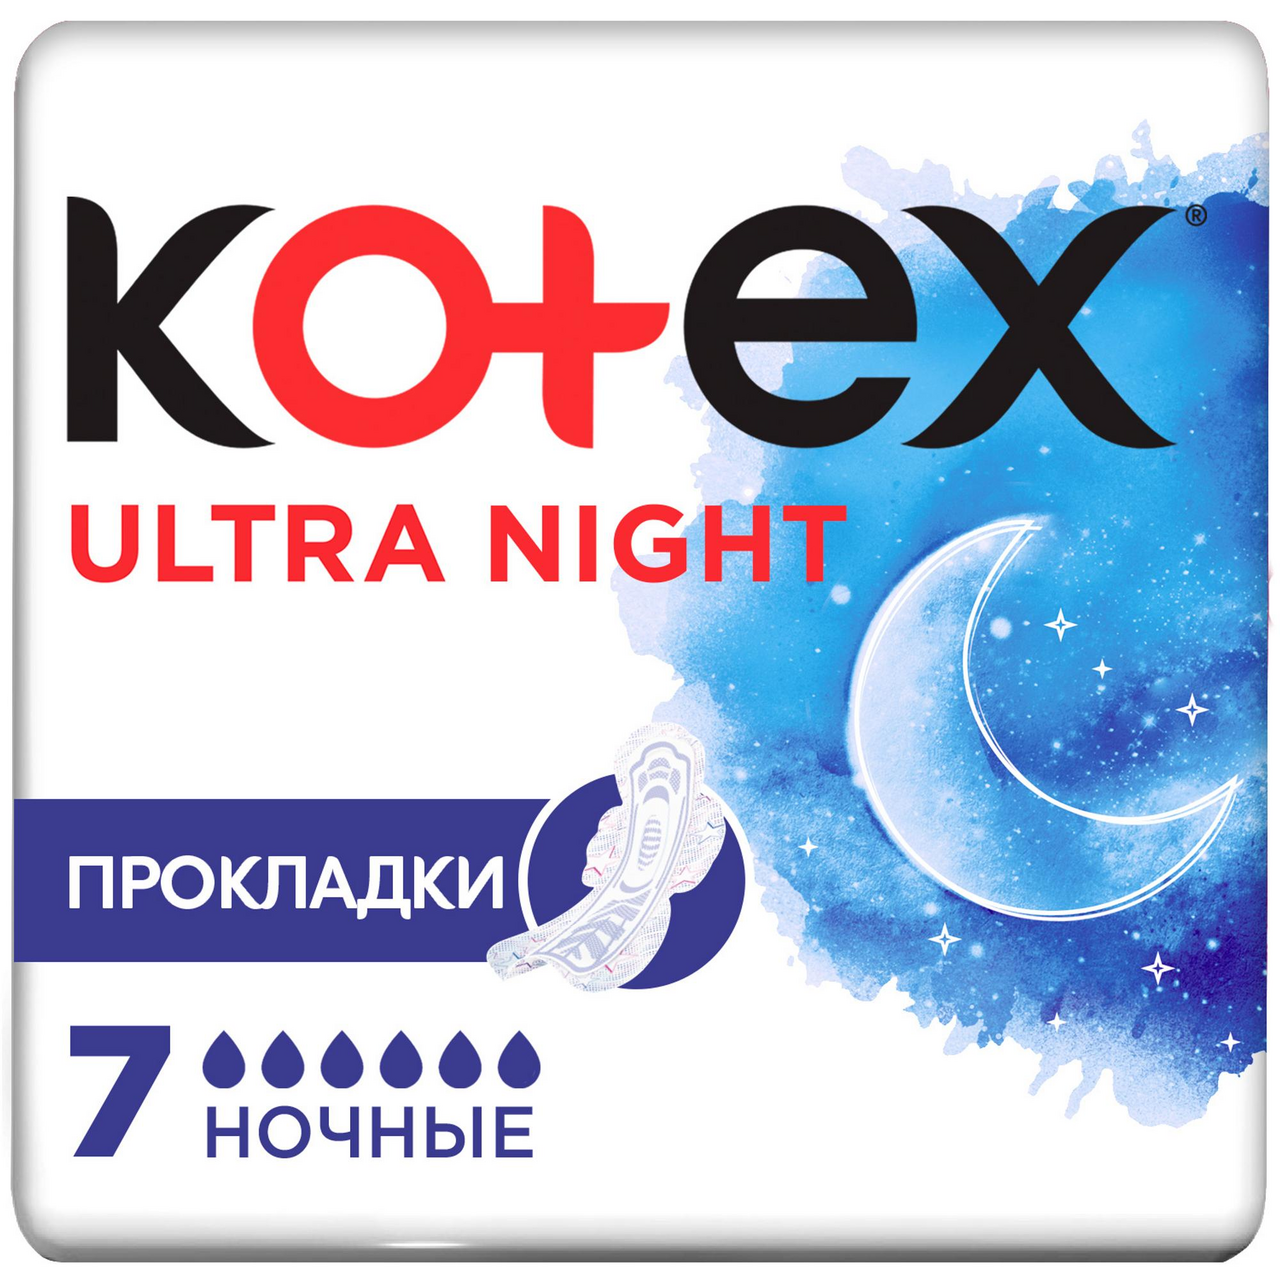 Прокладки KOTEX Ultra ночные, 7 шт.